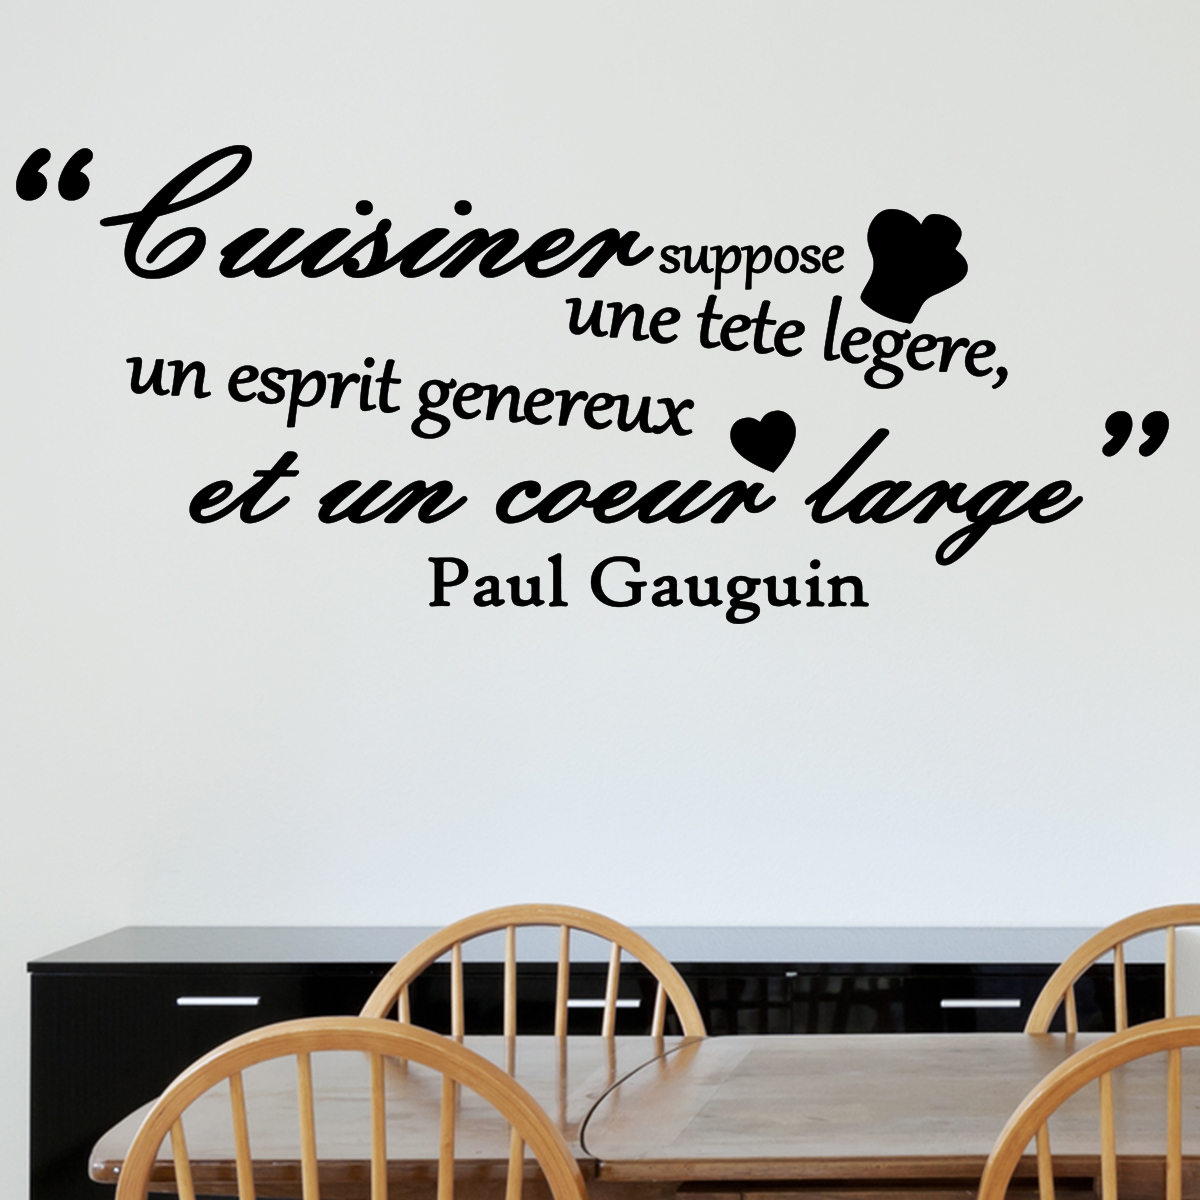 Sticker Cuisiner suppose un coeur large (Paul Gauguin)